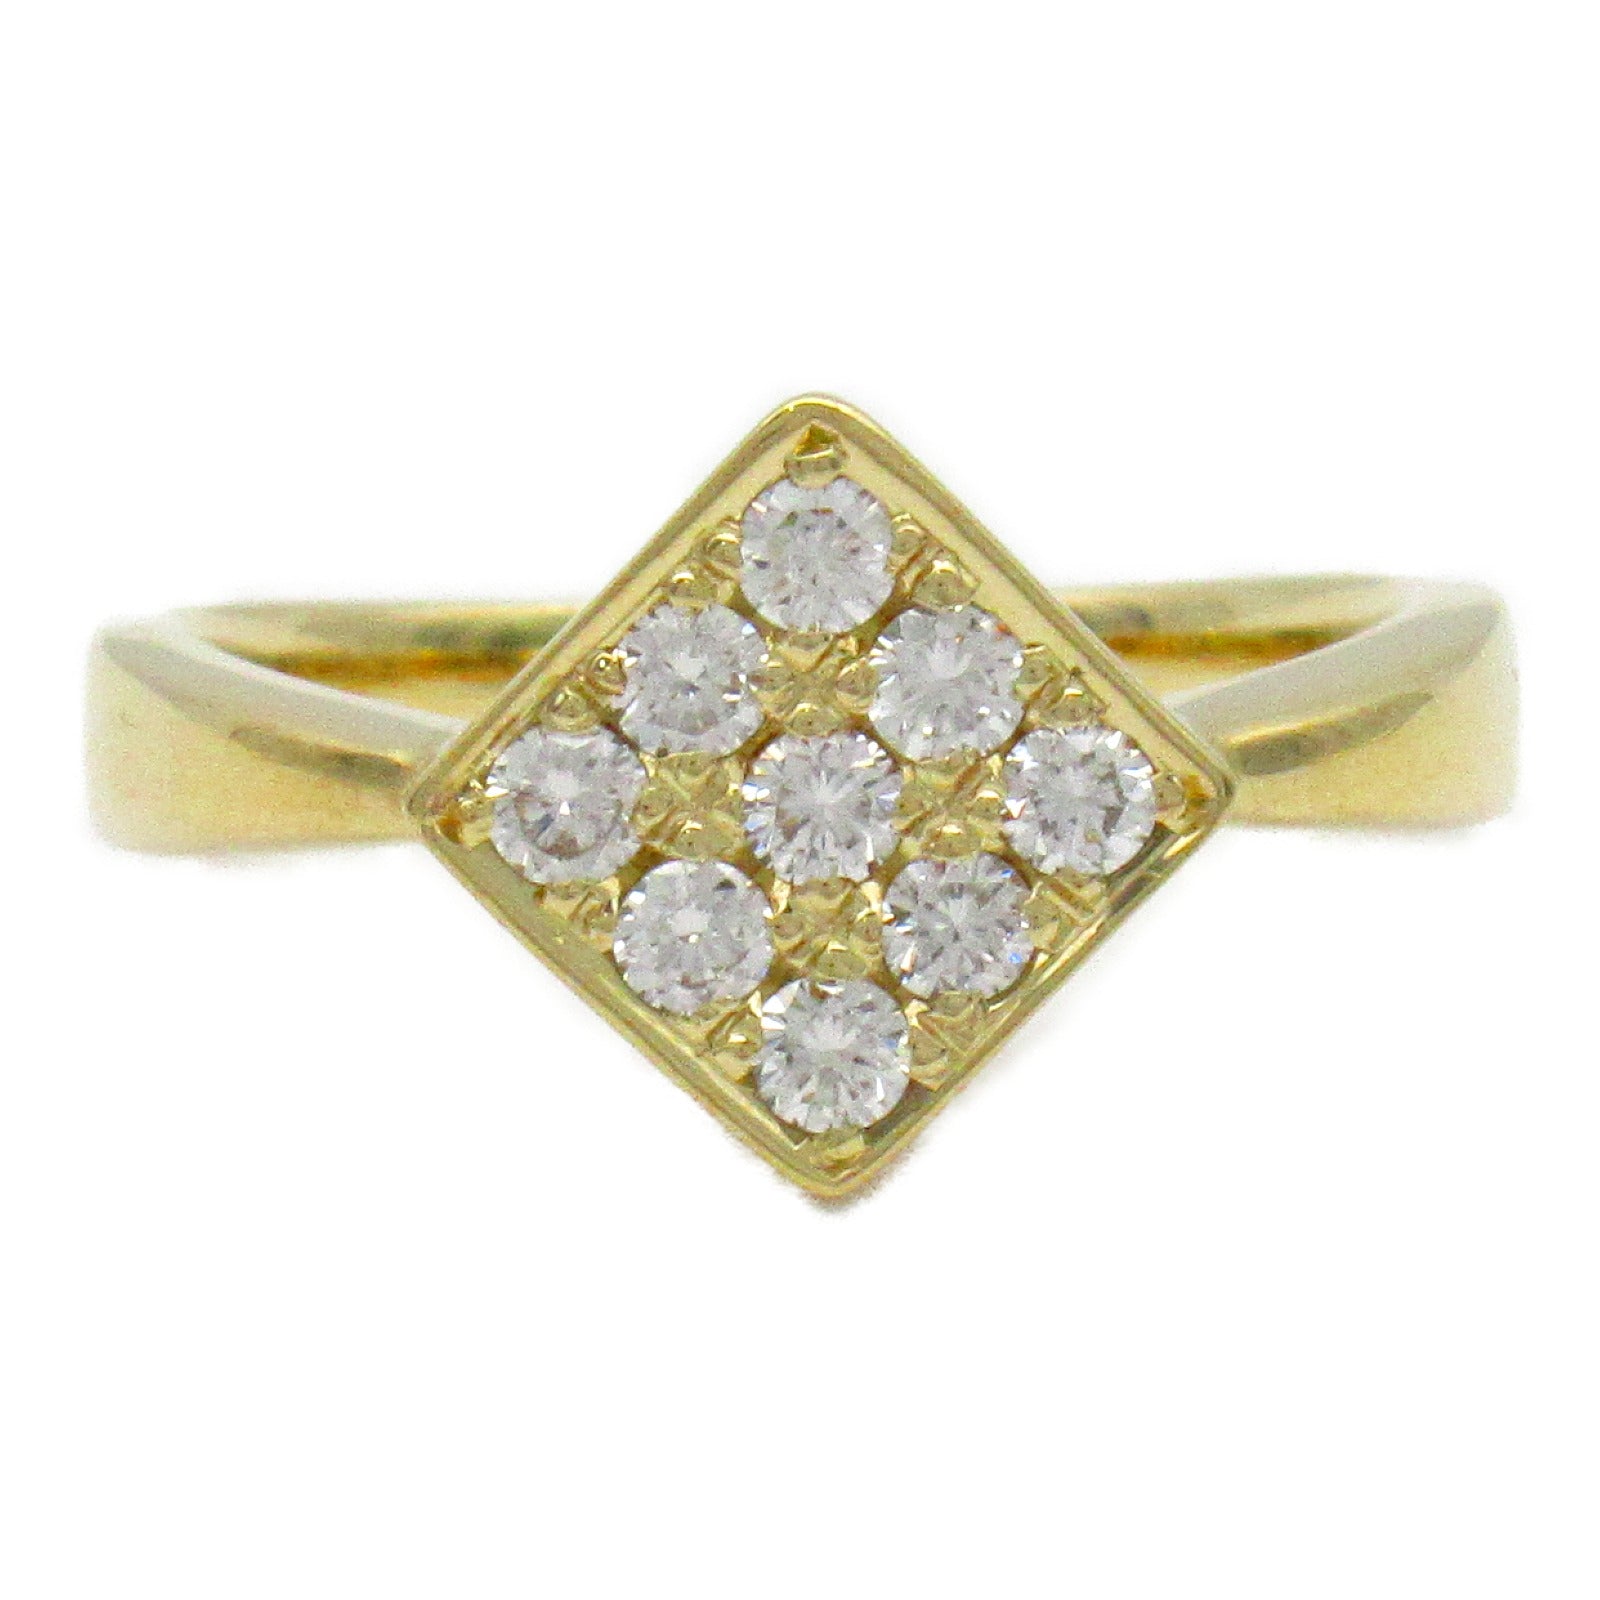 Jewelry Jewelry Diamond Ring Ring Ring Jewelry K18 (Yellow G) Diamond  Clear Diamond 4.7g